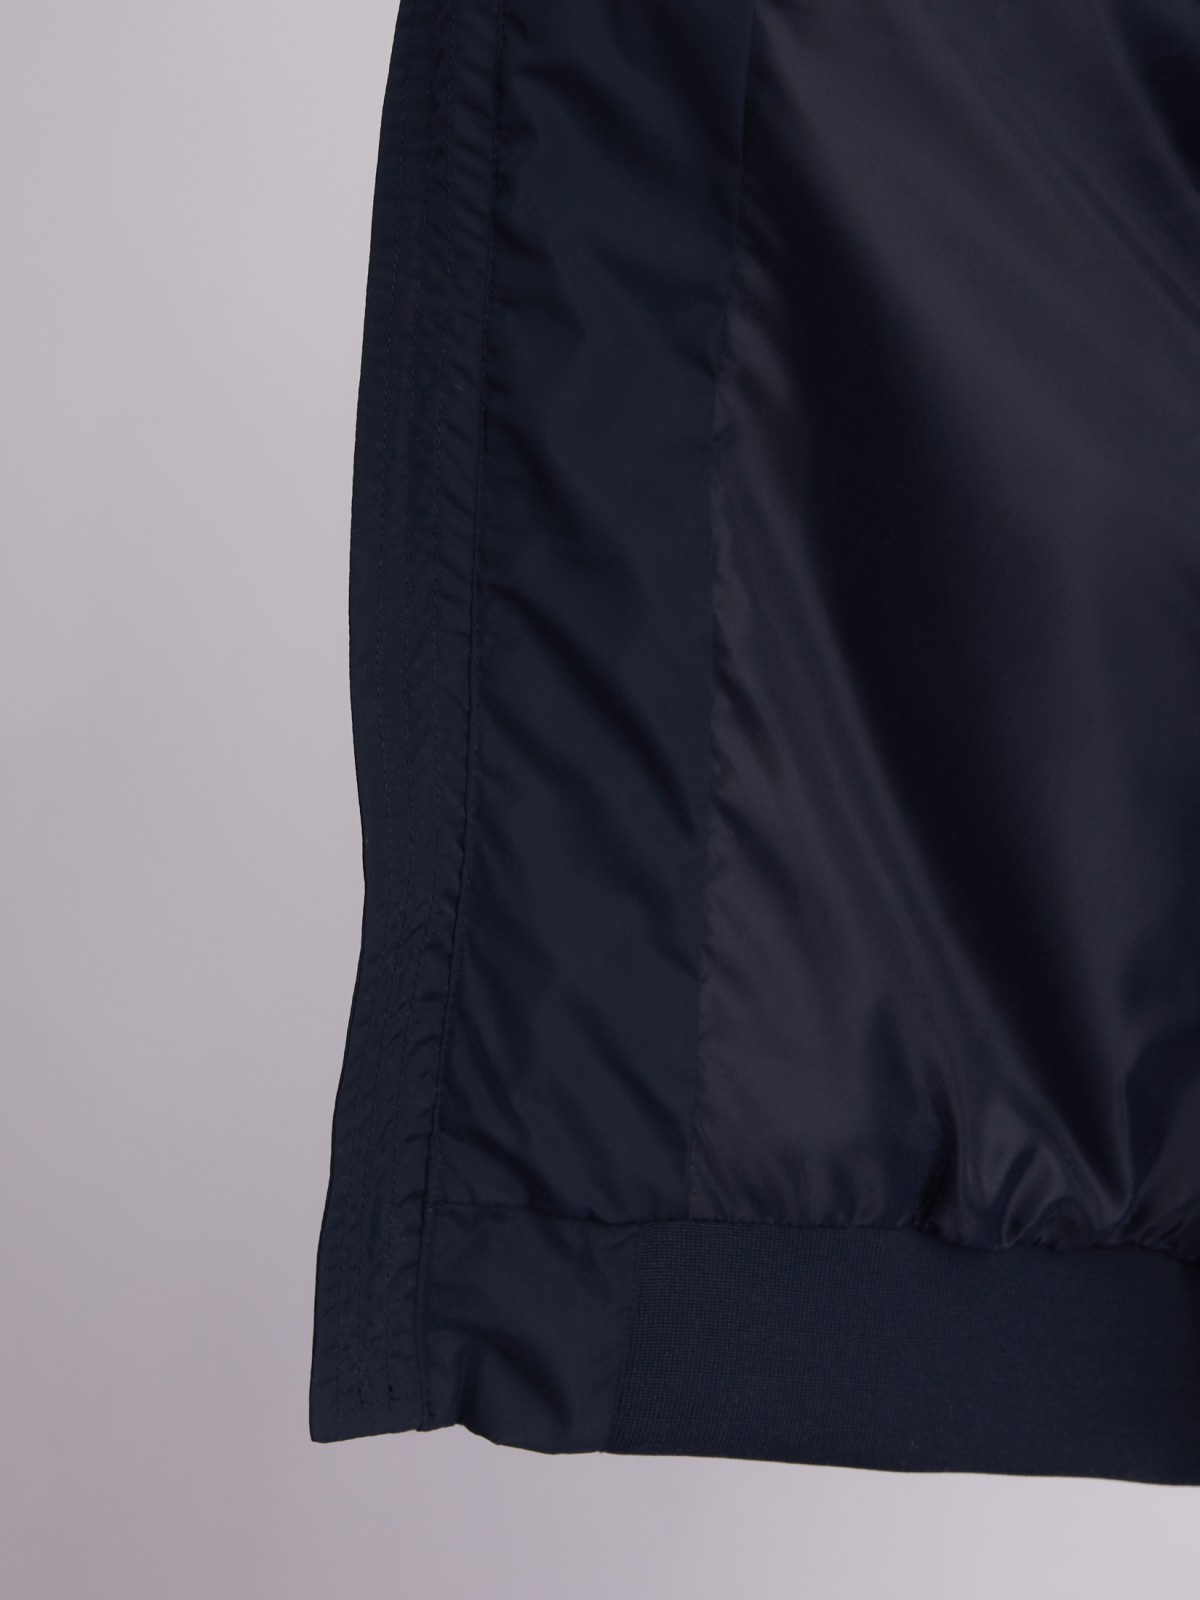 Куртка-бомбер с воротником-стойкой zolla 013215602044, цвет темно-синий, размер L - фото 3